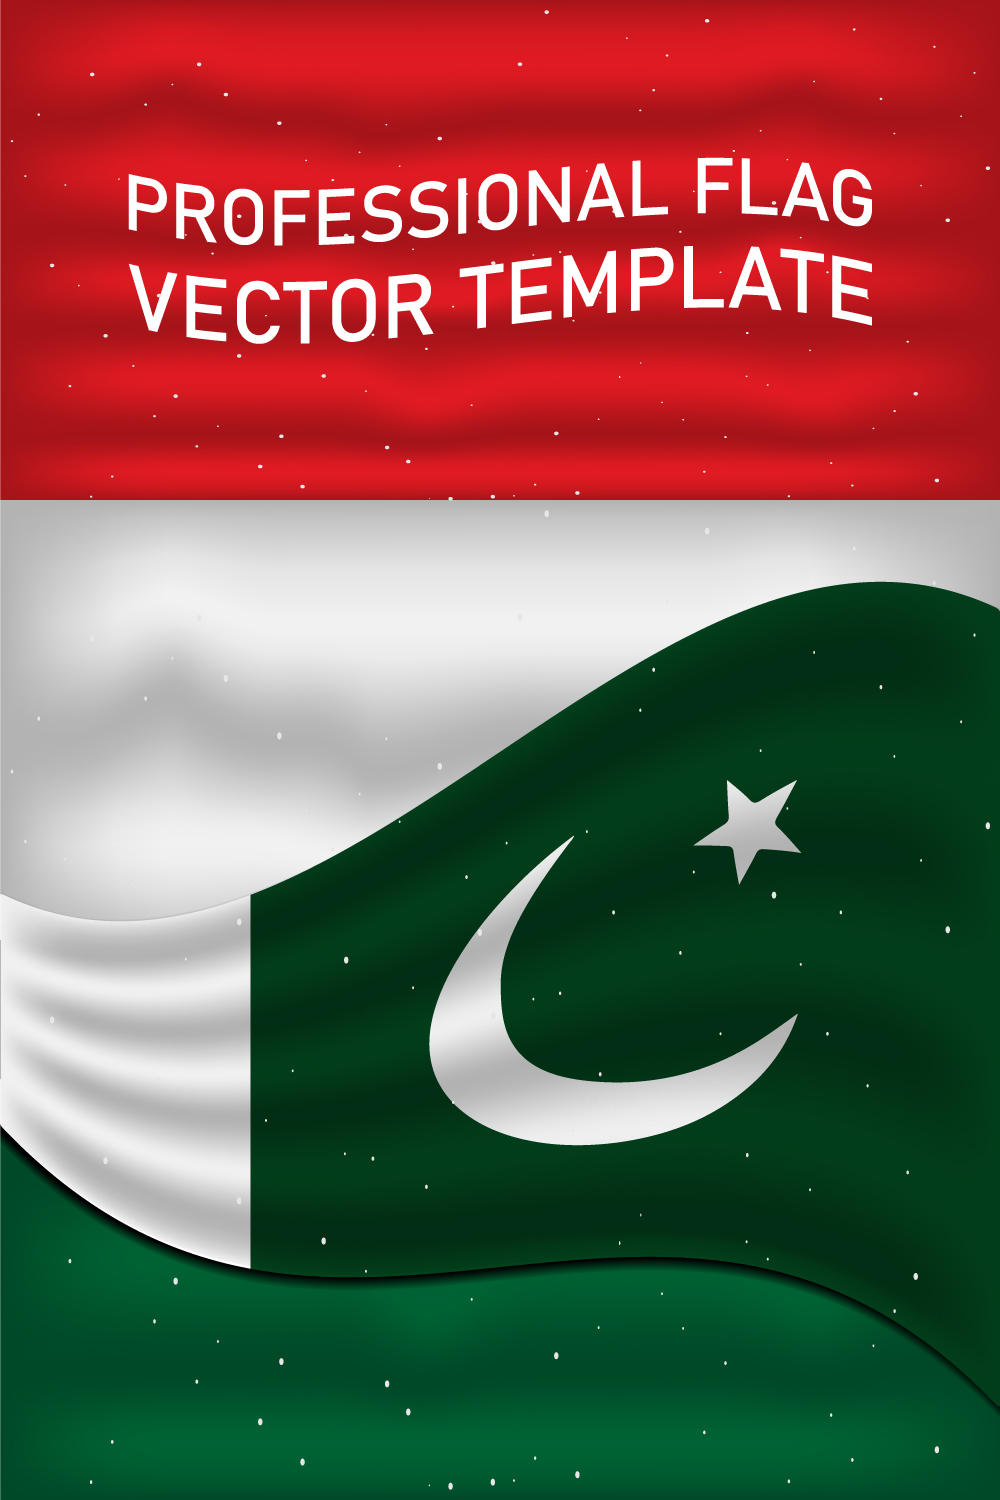 Beautiful image of Pakistan flag.